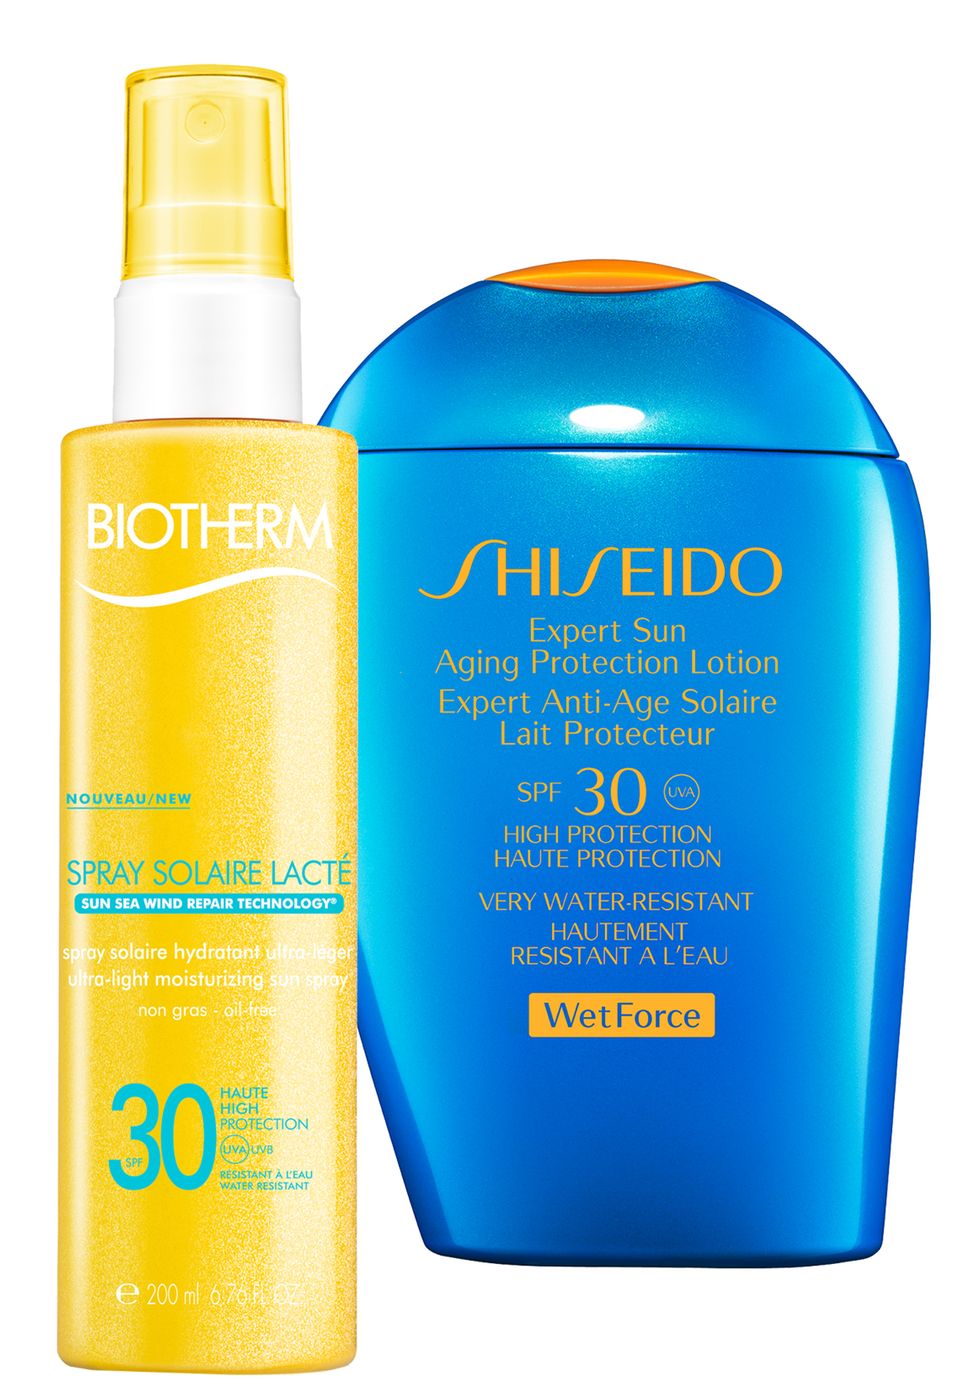 Links:  "Spray Solaire Lacté LSF 15" von Biotherm, 200 ml, ca. 26 Euro; Rechts: "Expert Sun Aging Protection Lotion SPF 30" von Shiseido, 100 ml, ca. 31 Euro